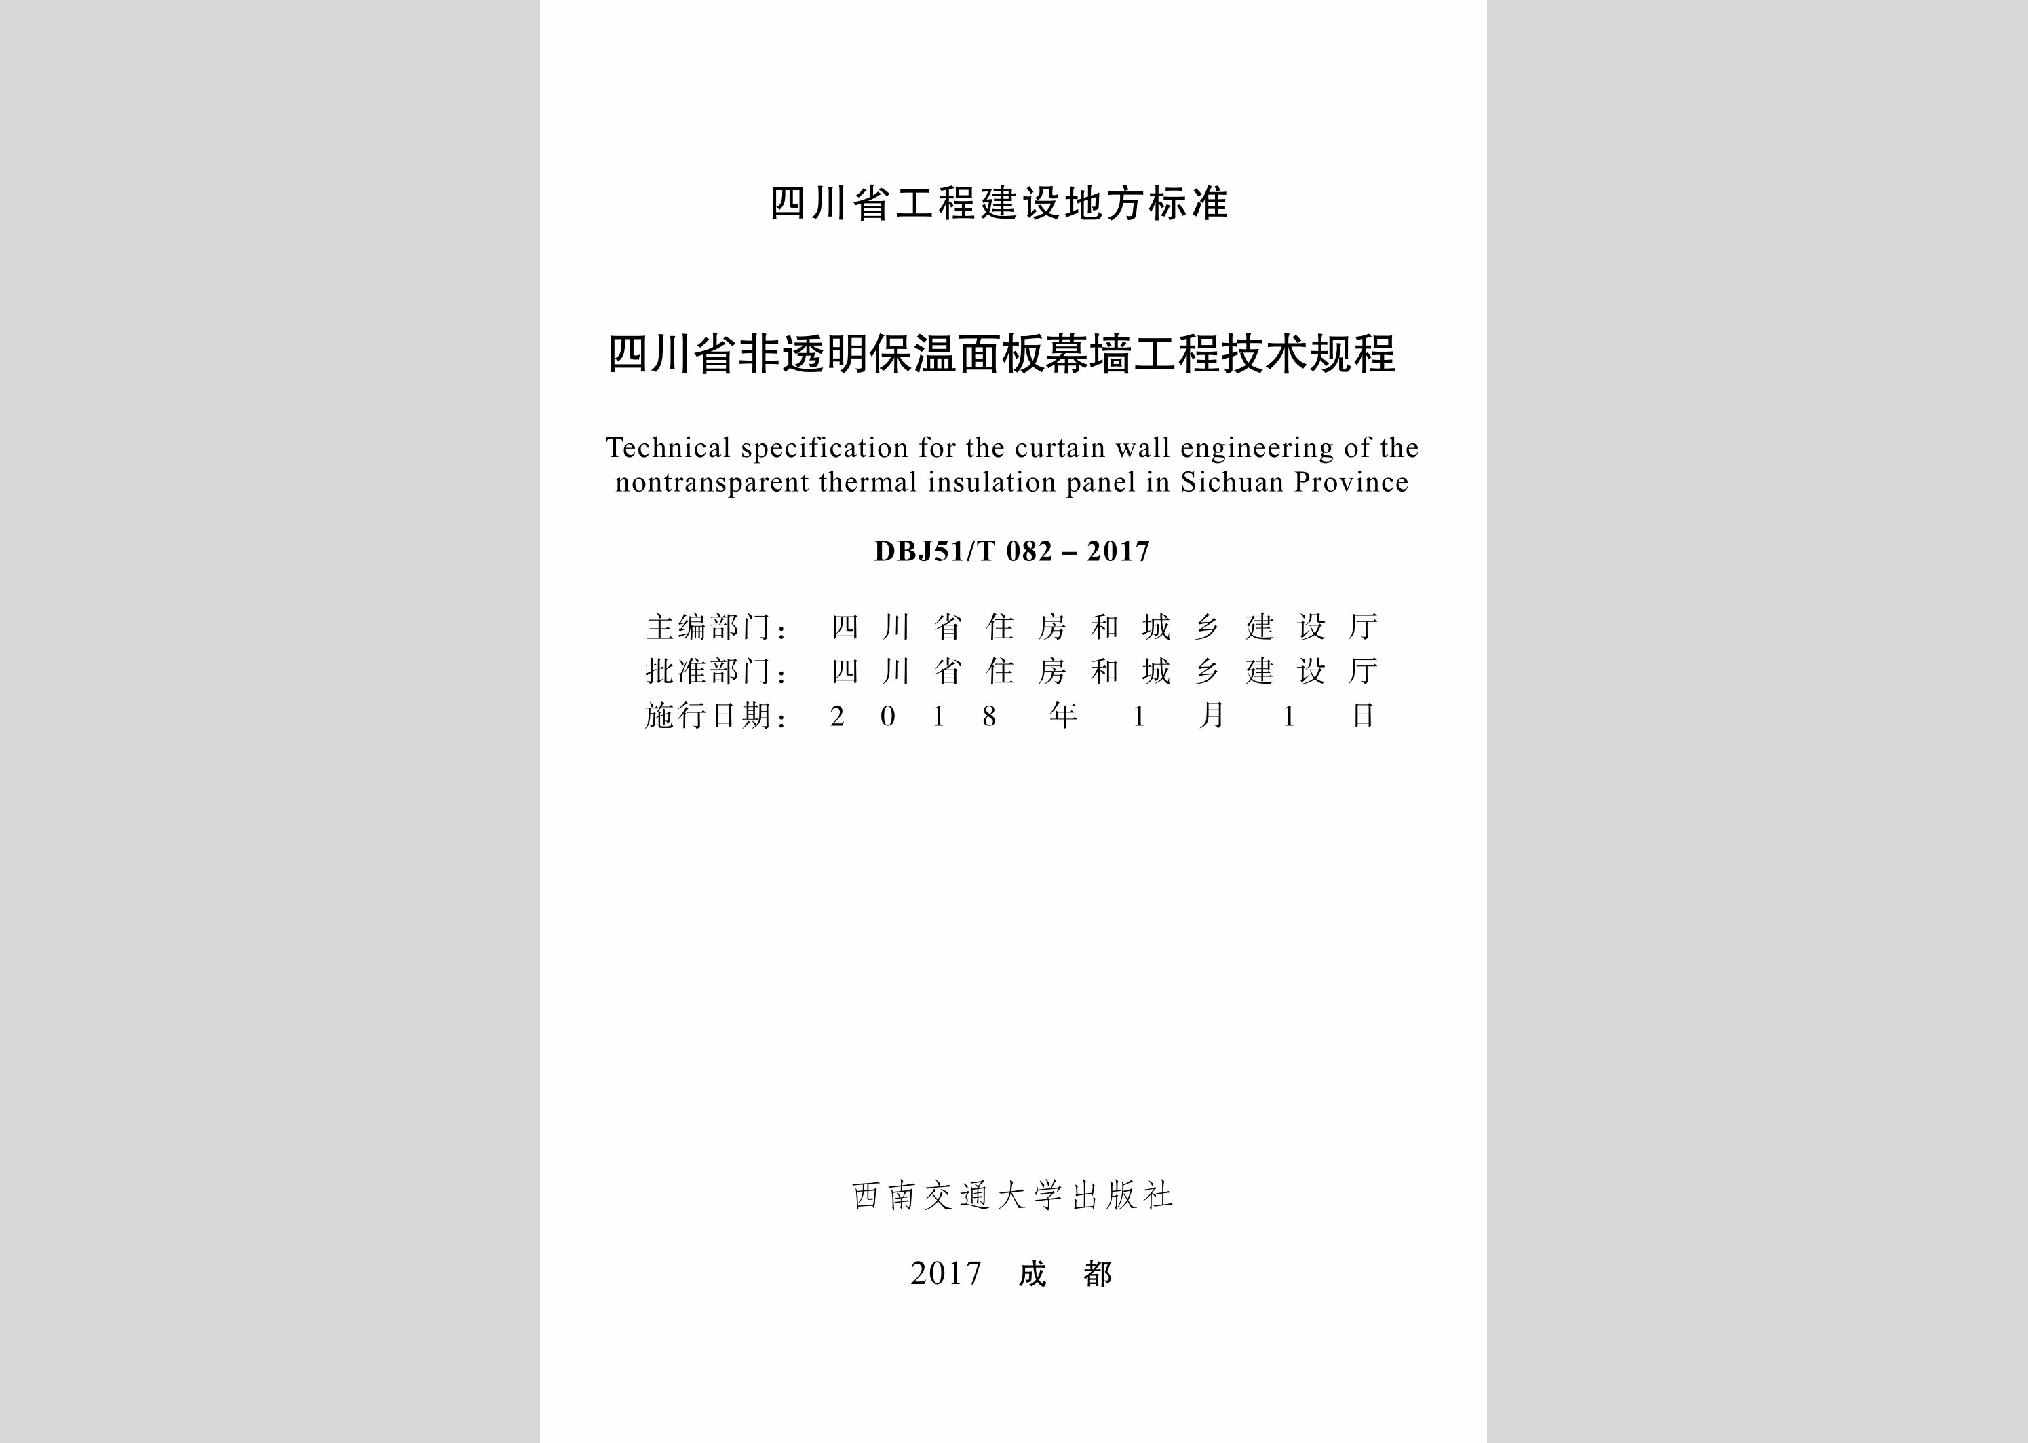 DBJ51/T082-2017：四川省非透明保温面板幕墙工程技术规程